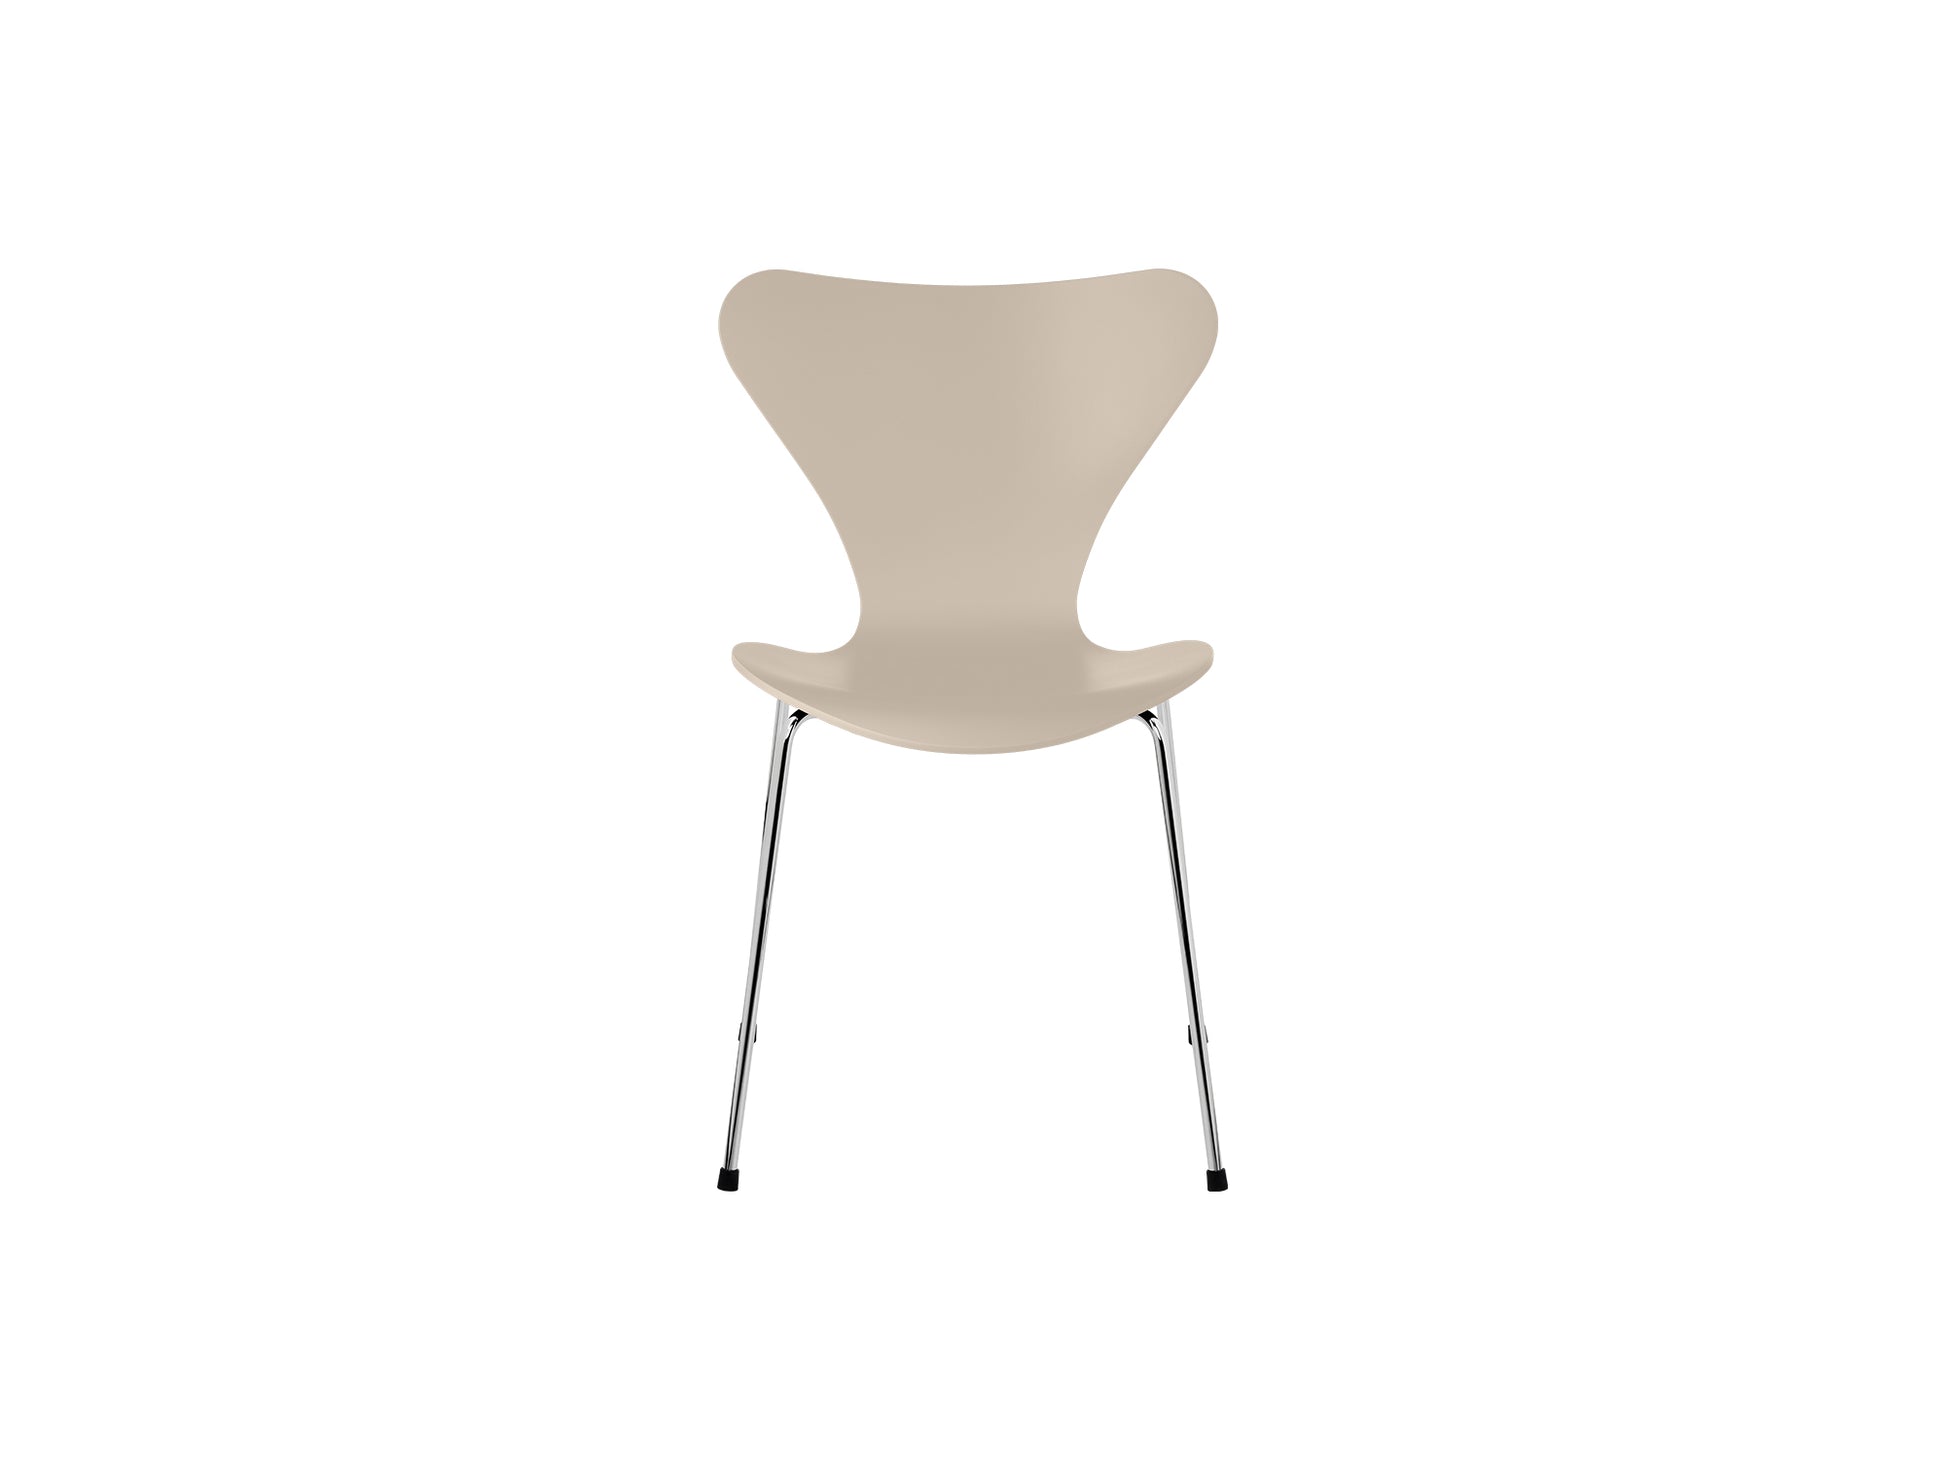 Series 7™ 3107 Dining Chair by Fritz Hansen - Light Beige Lacquered Veneer Shell / Chromed Steel